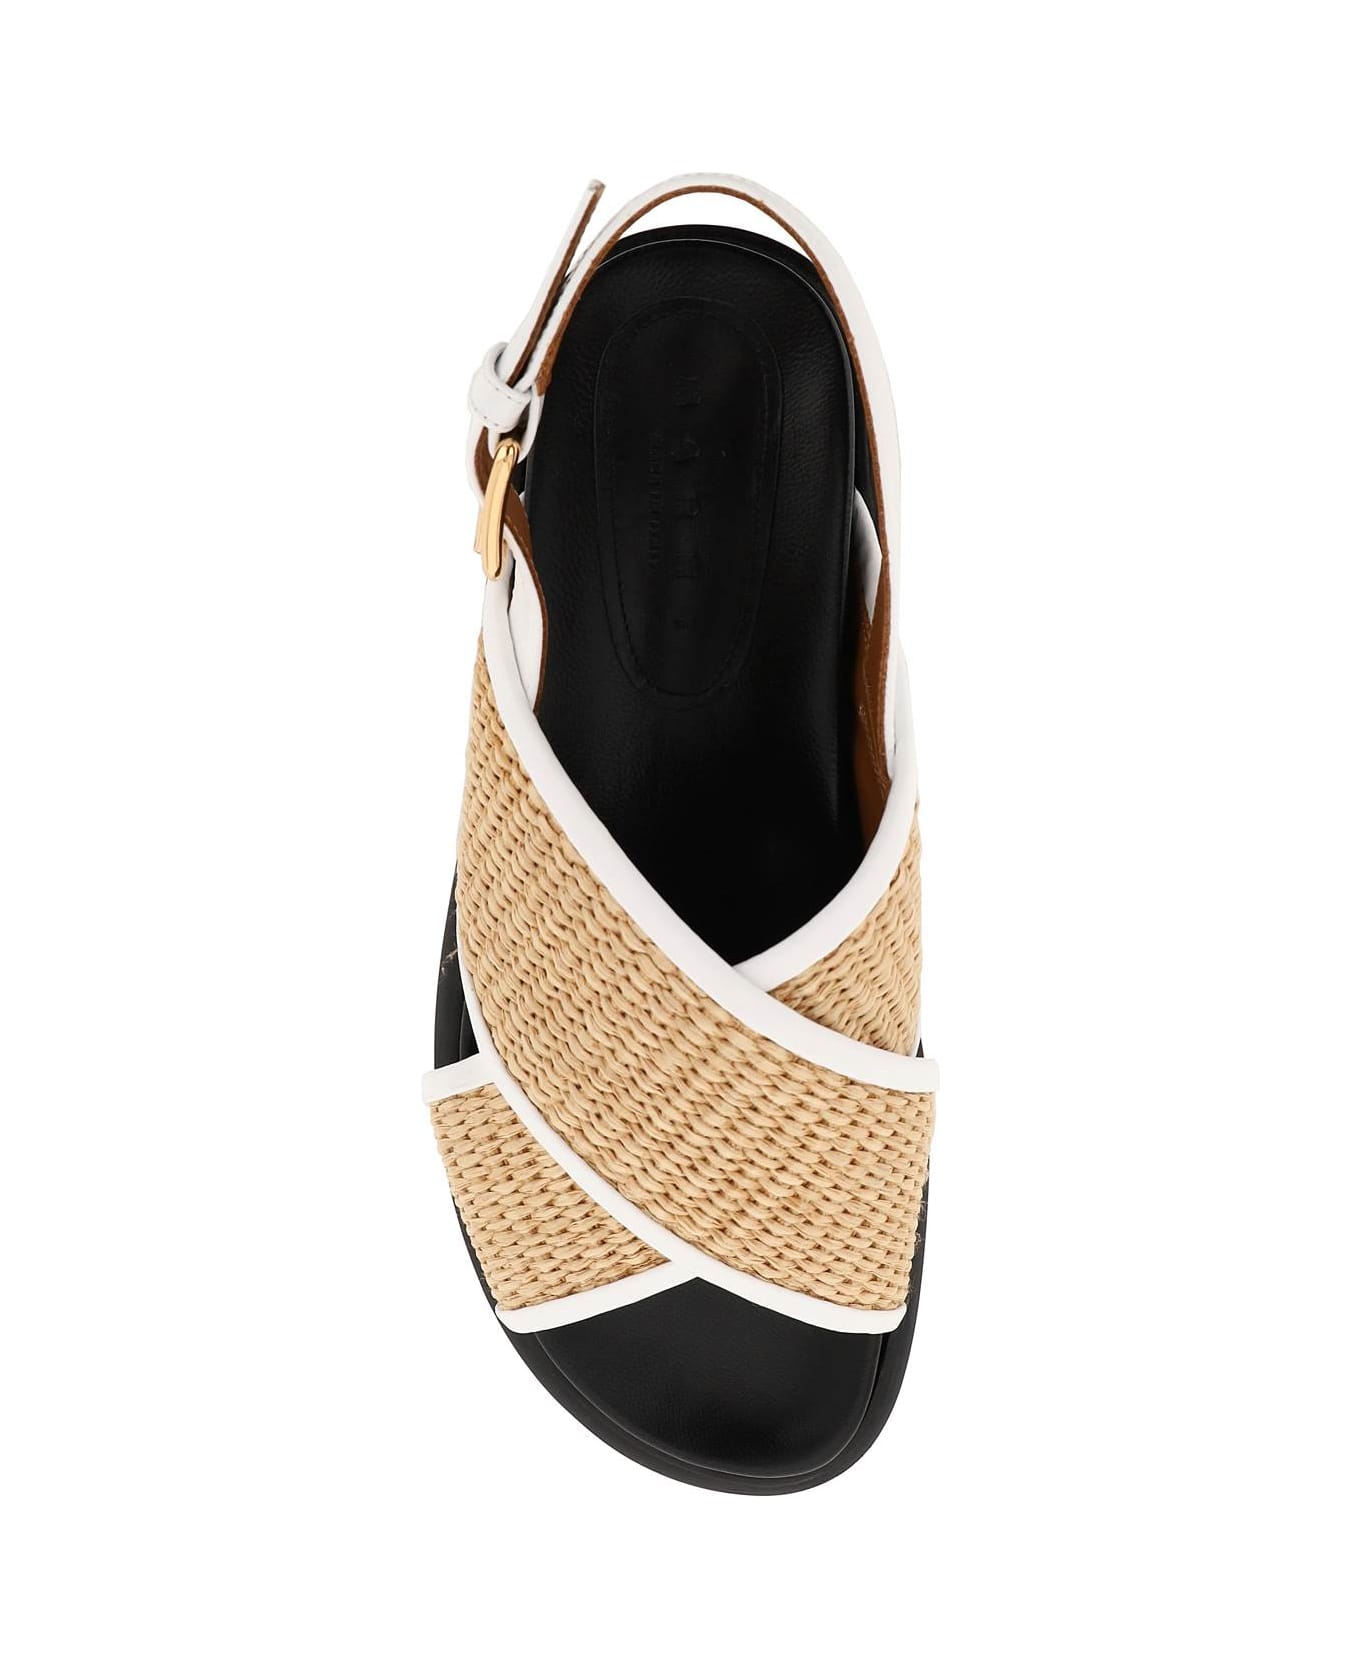 Marni Raffia And Leather Criss-cross Fussbett Sandal - White/black サンダル